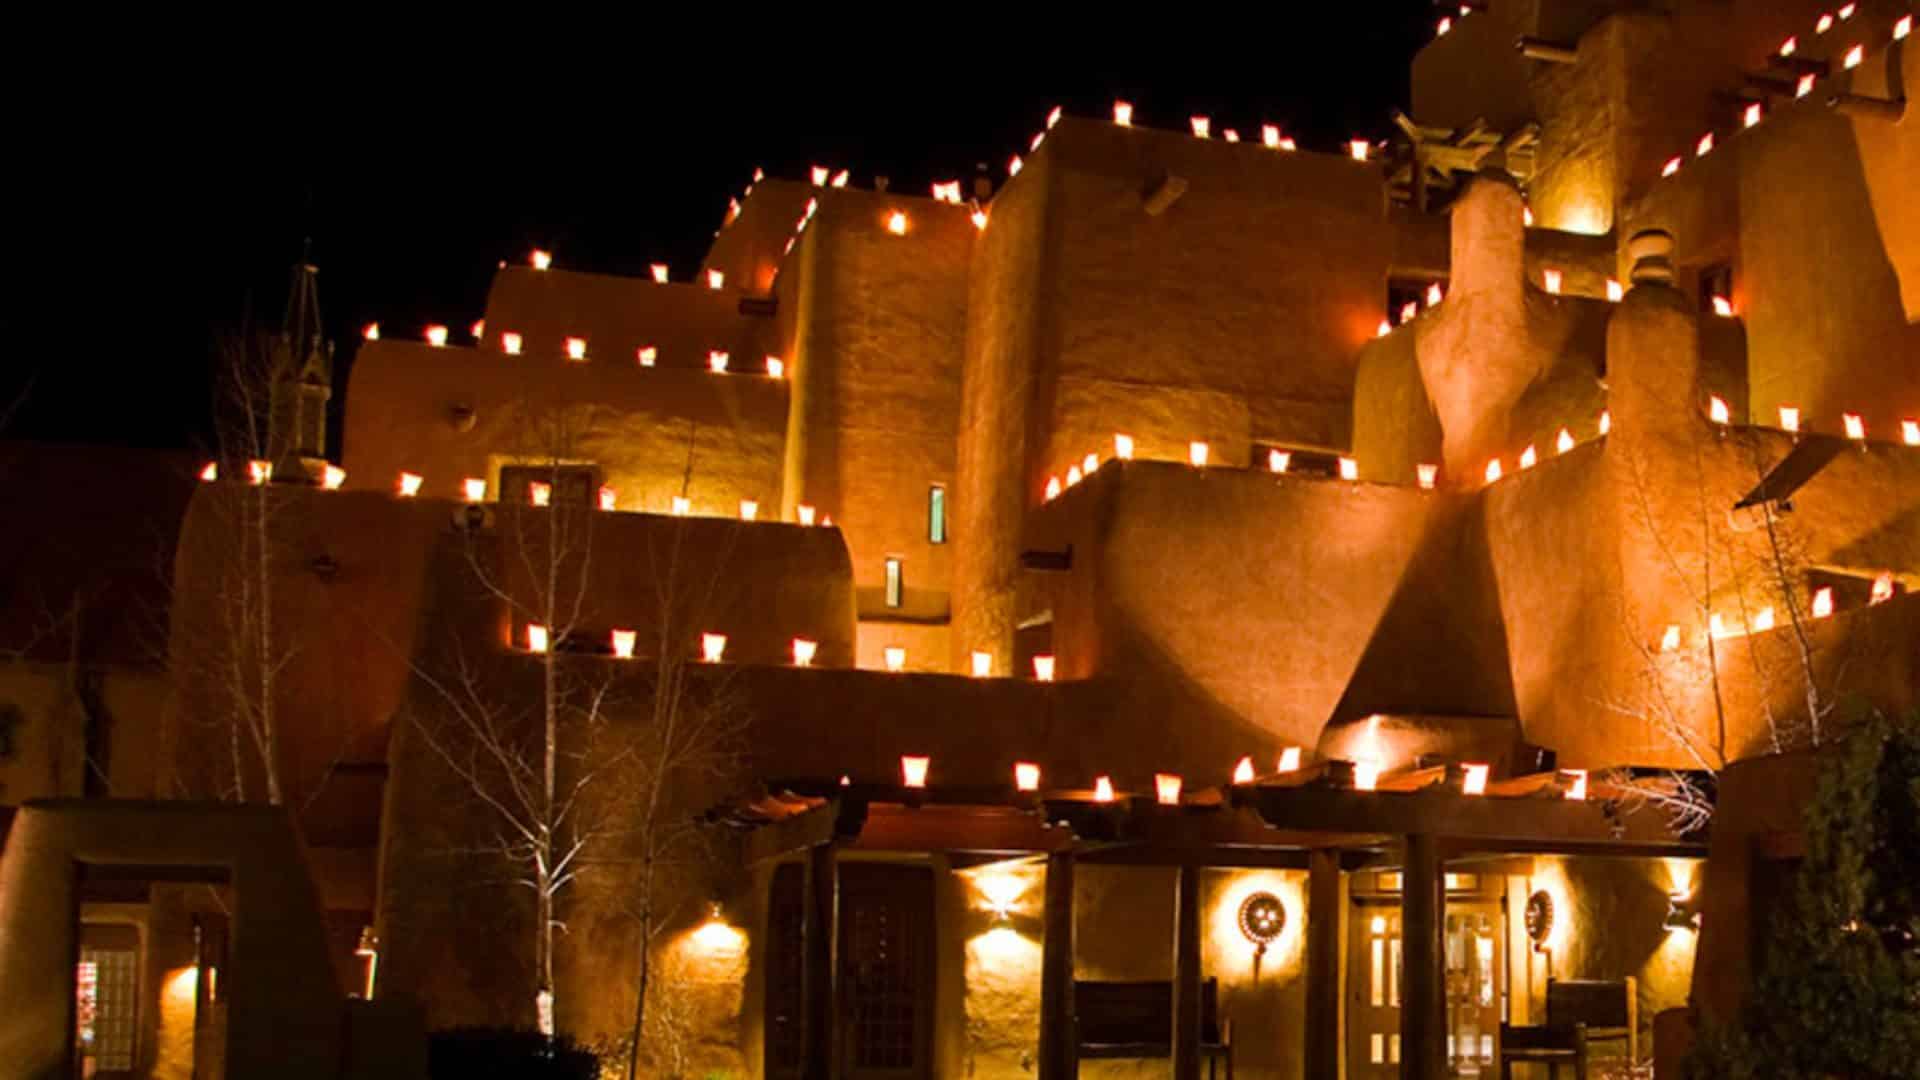 Multi-story, historic adobe building in santa fe dressed in layers of lit up farolitos.